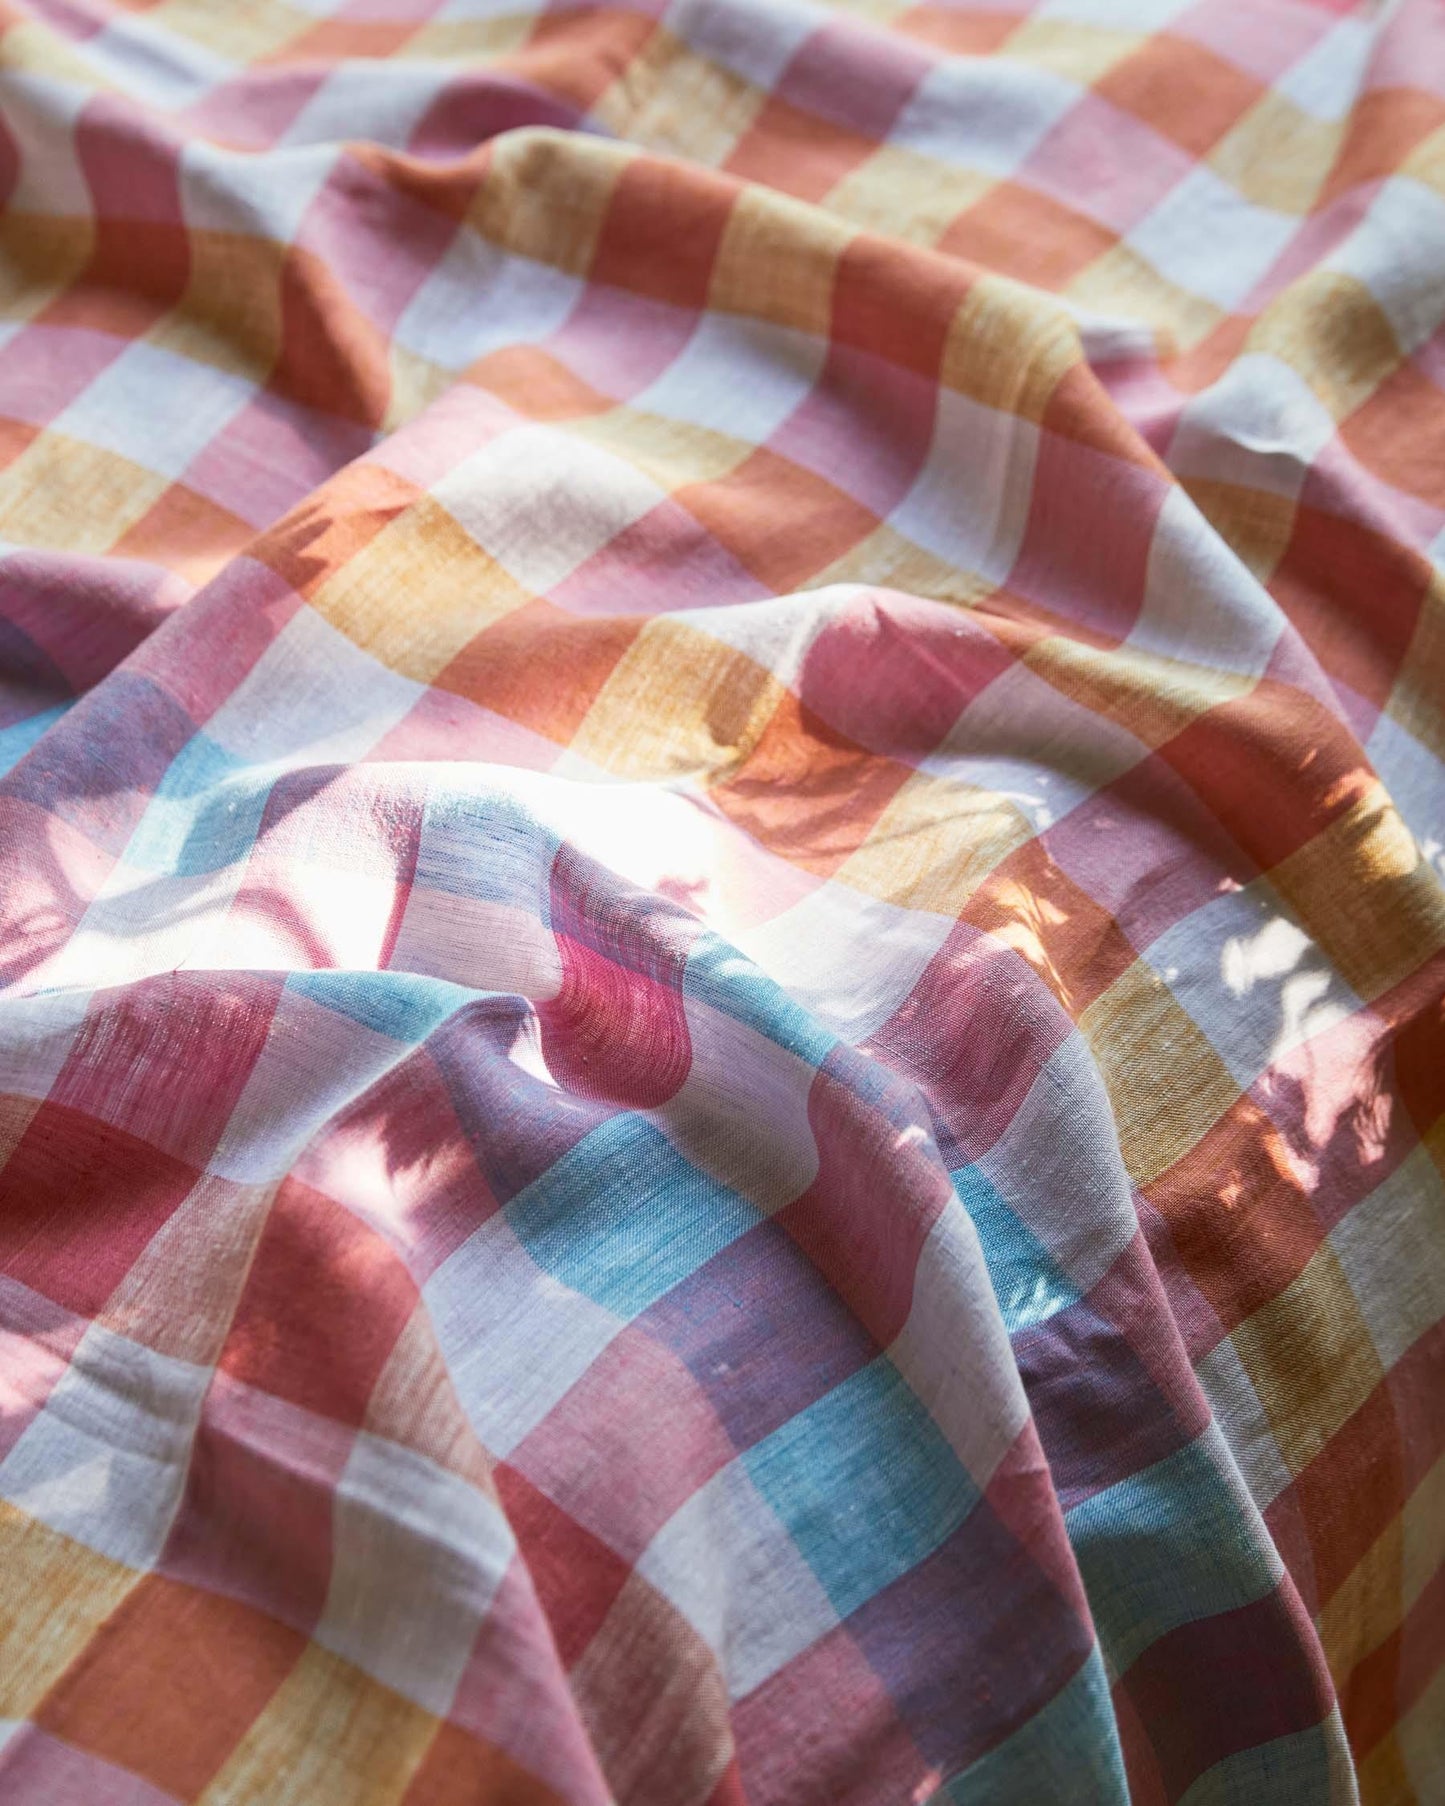 Kip & Co Summer Check Bed Linen